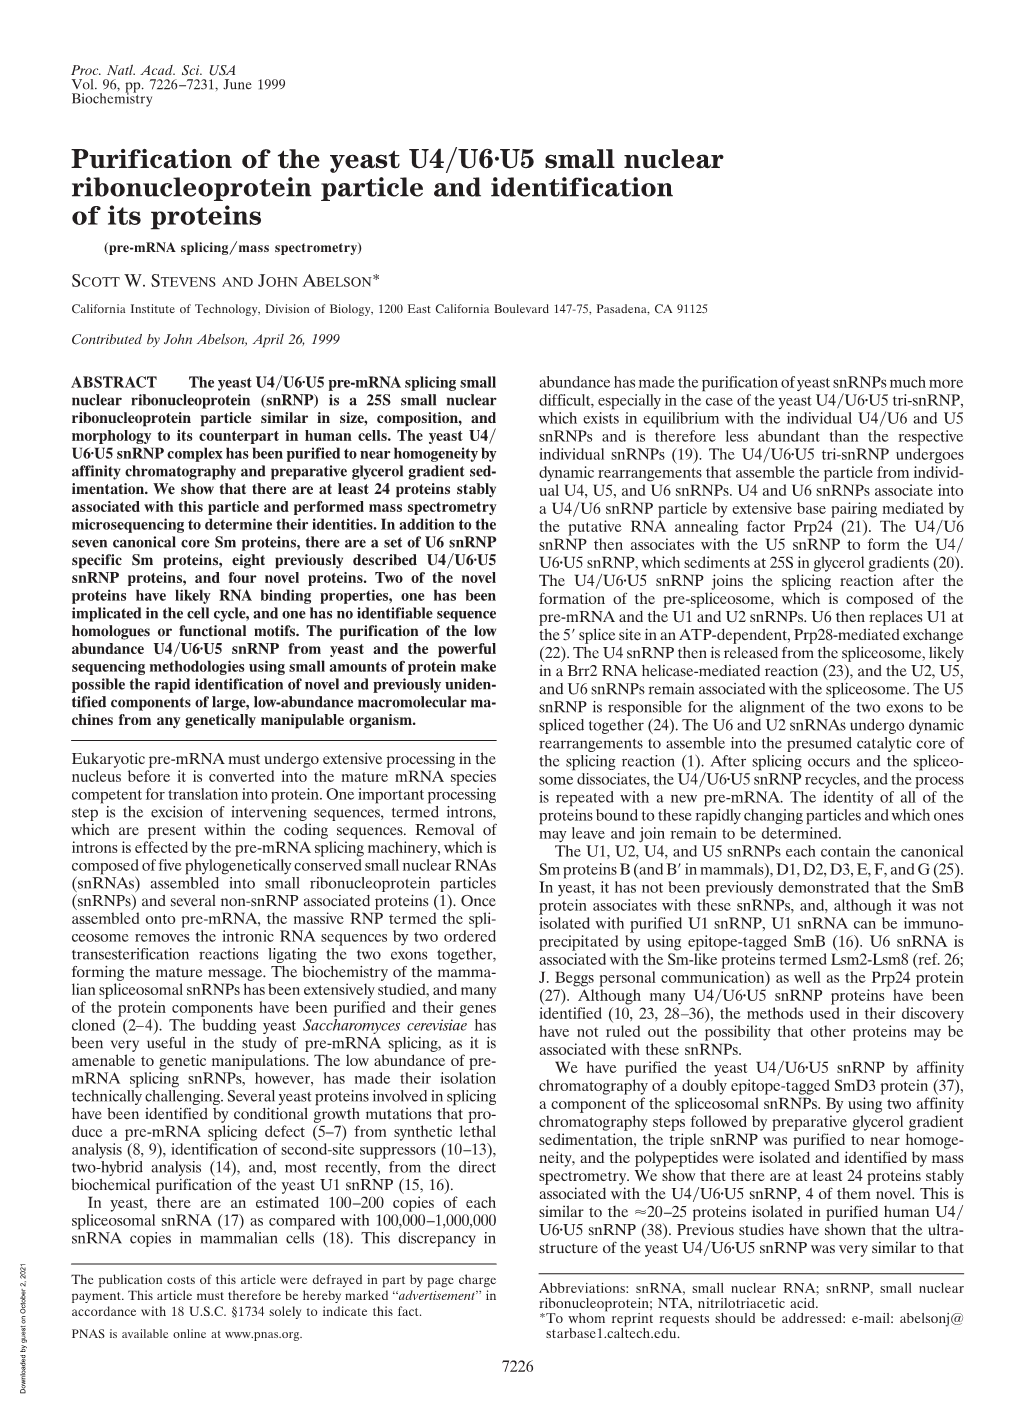 Purification of the Yeast U4/U6 U5 Small Nuclear Ribonucleoprotein